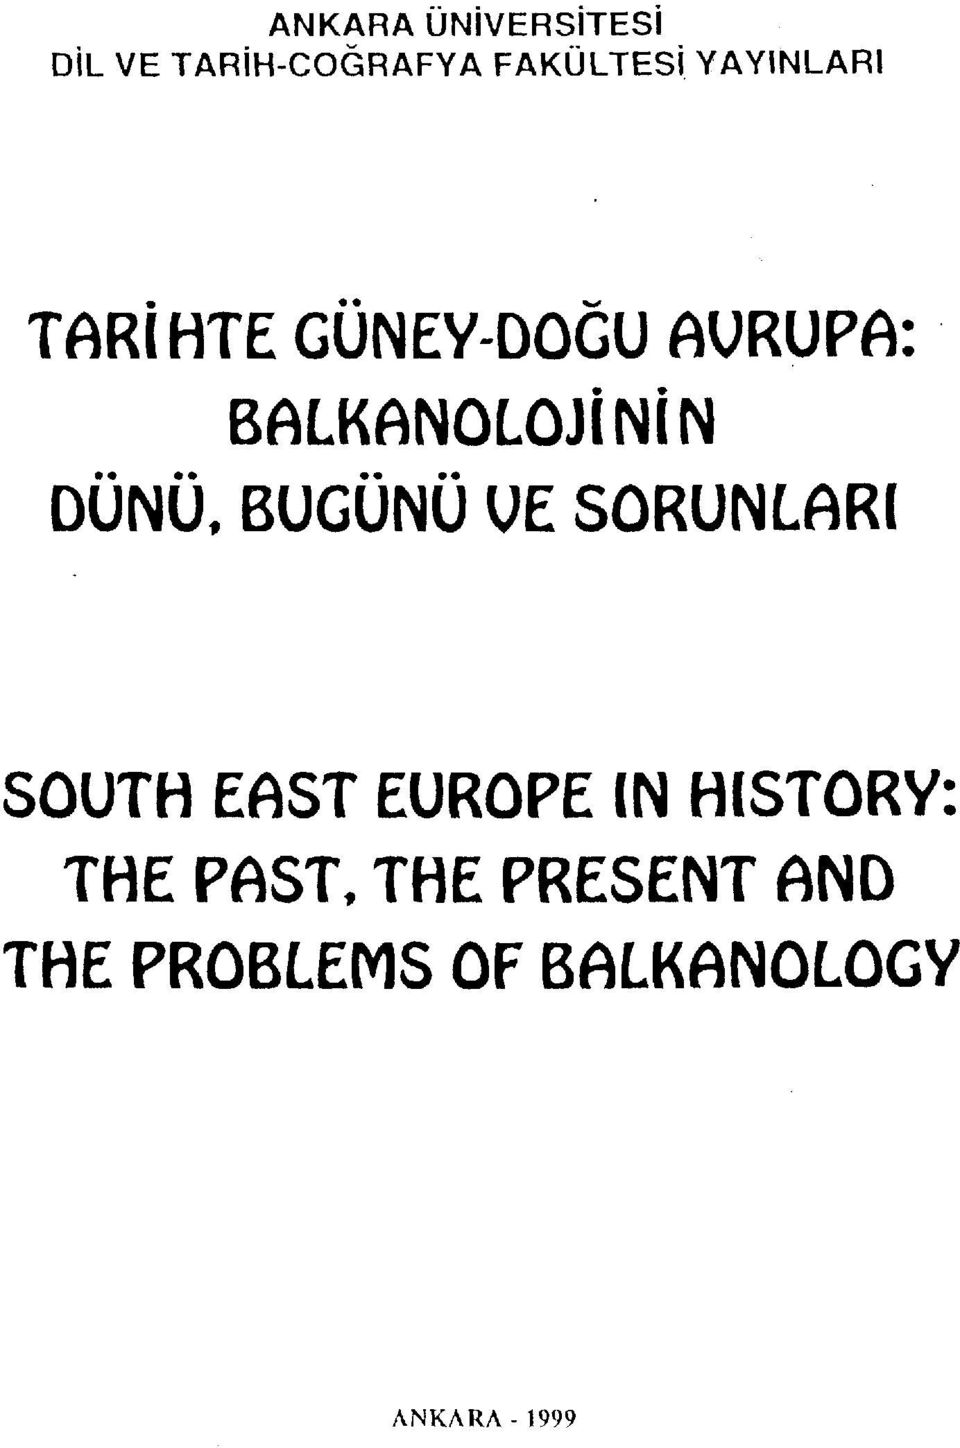 BUGUnU ue SORUNLARI SOUTH EAST EUROPE IN HISTORY: THE